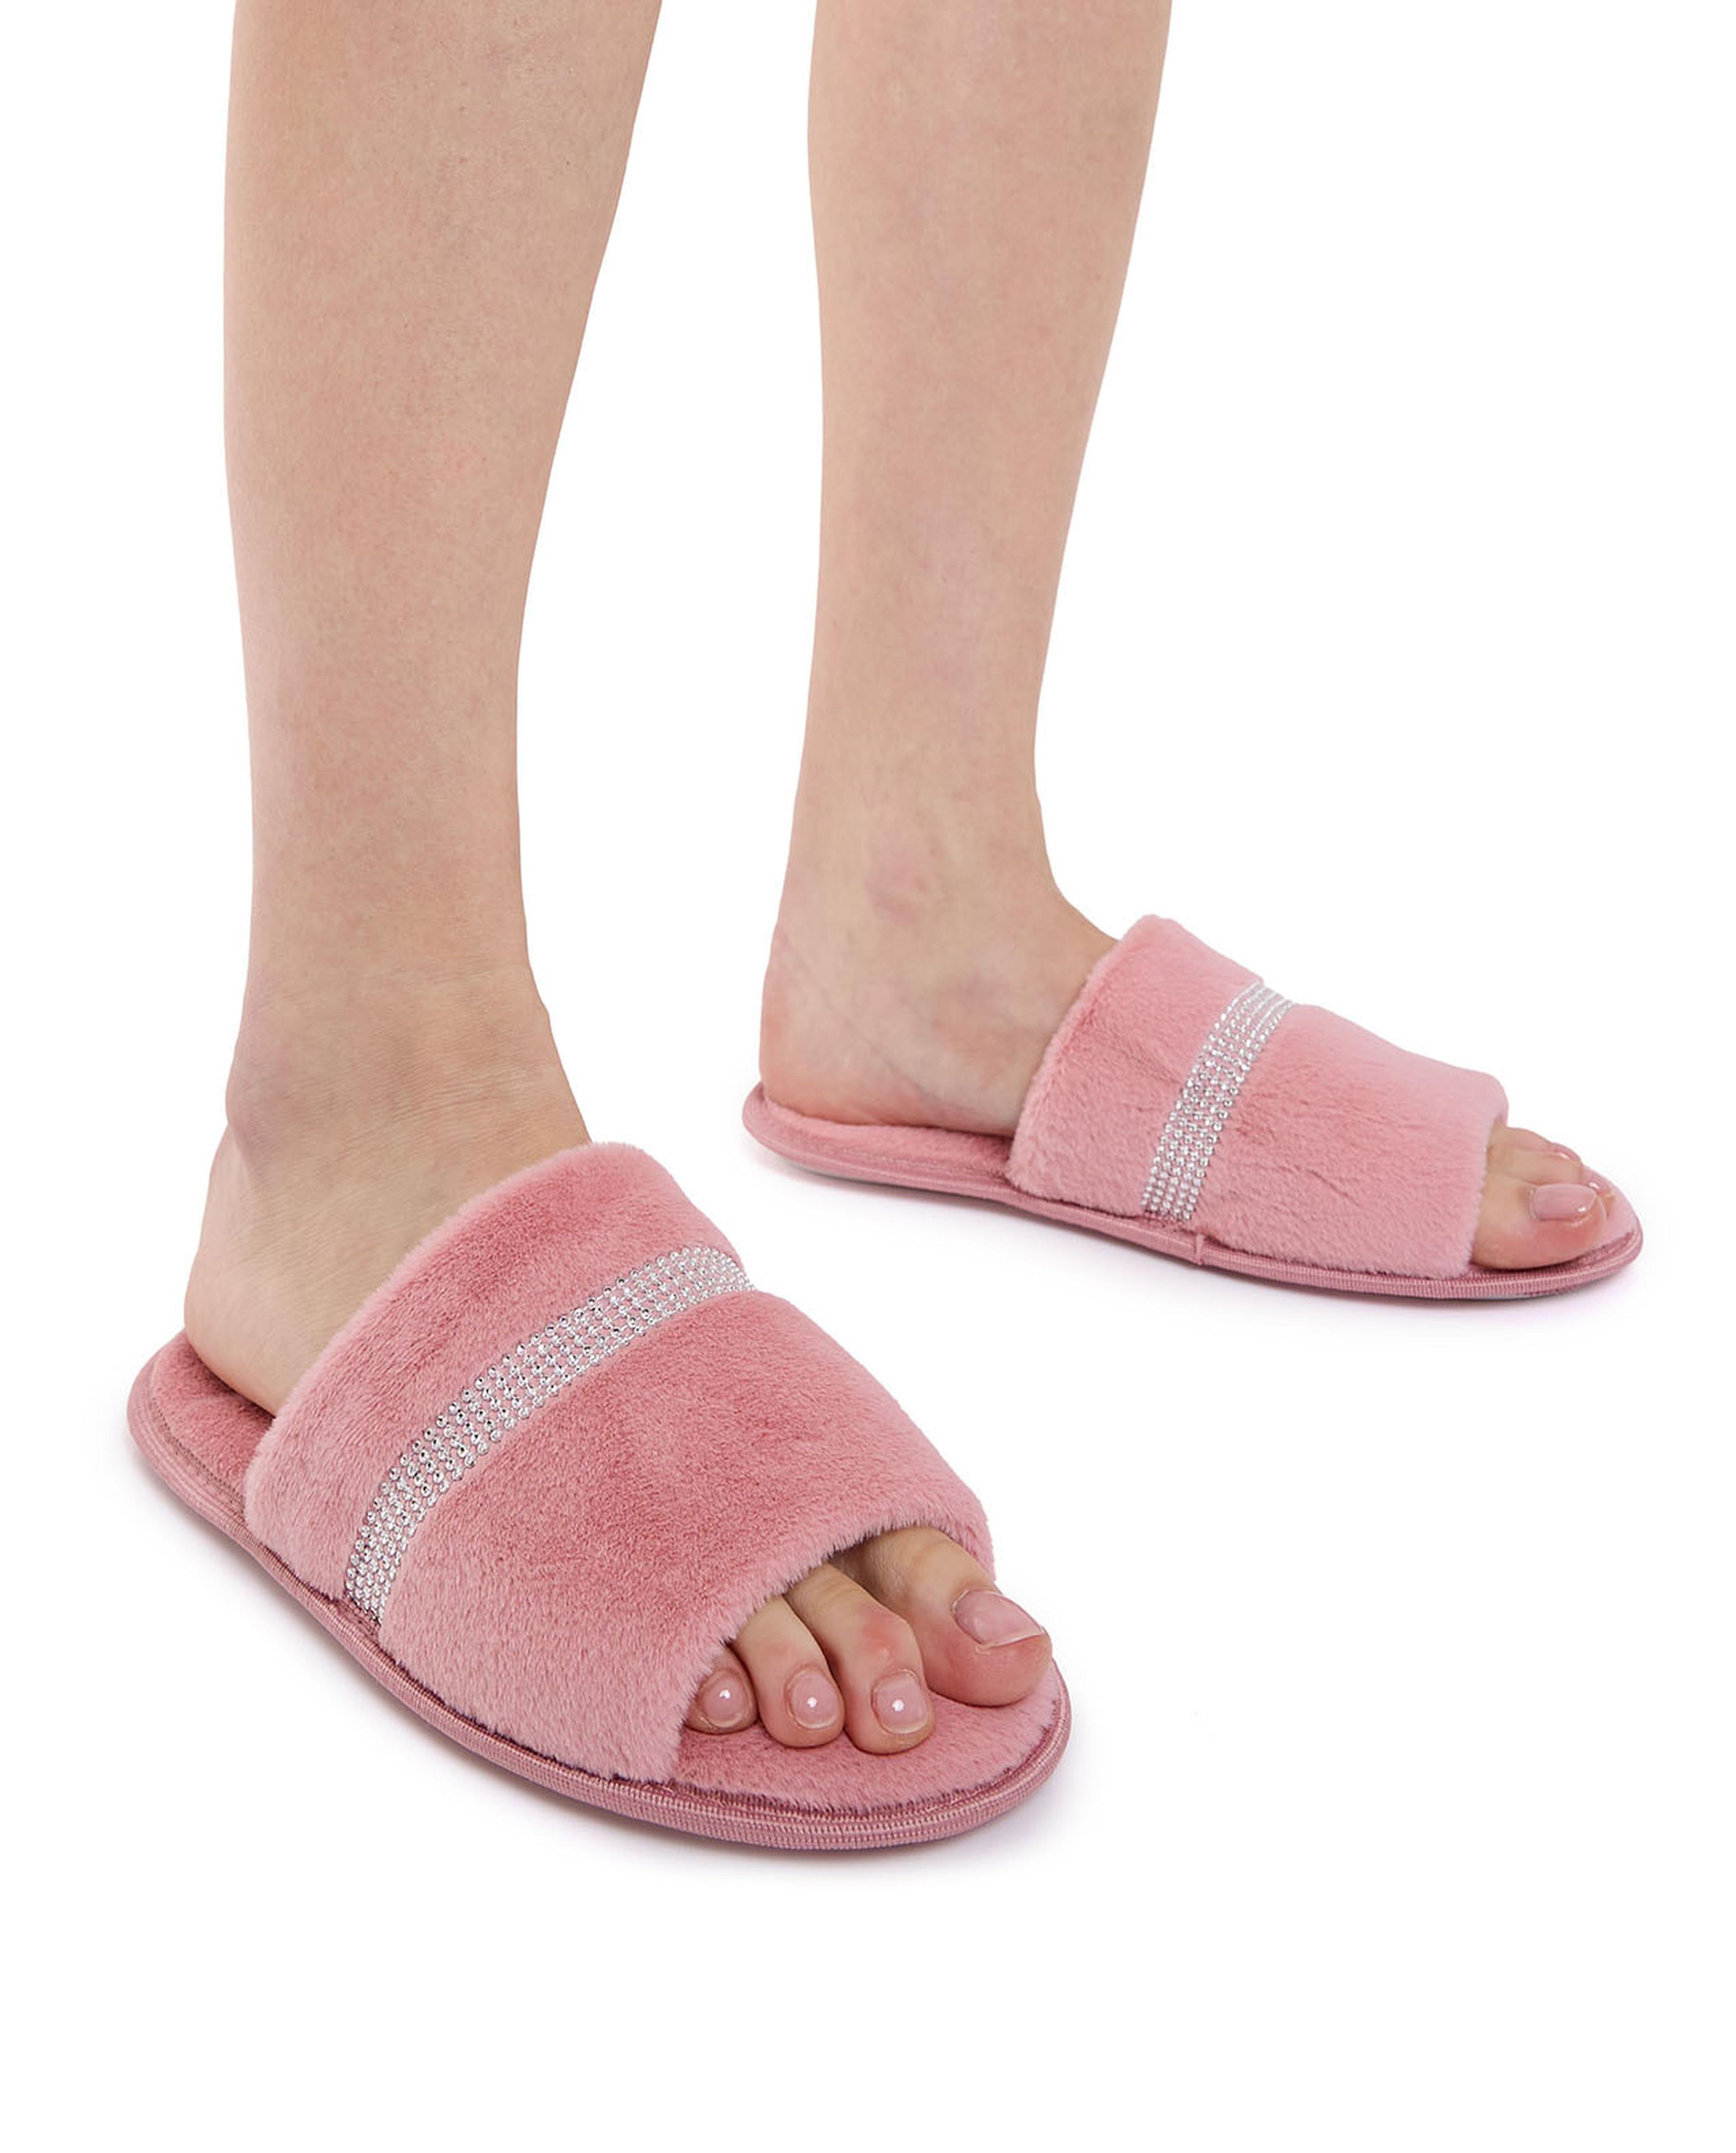 Embellished Home Slippers